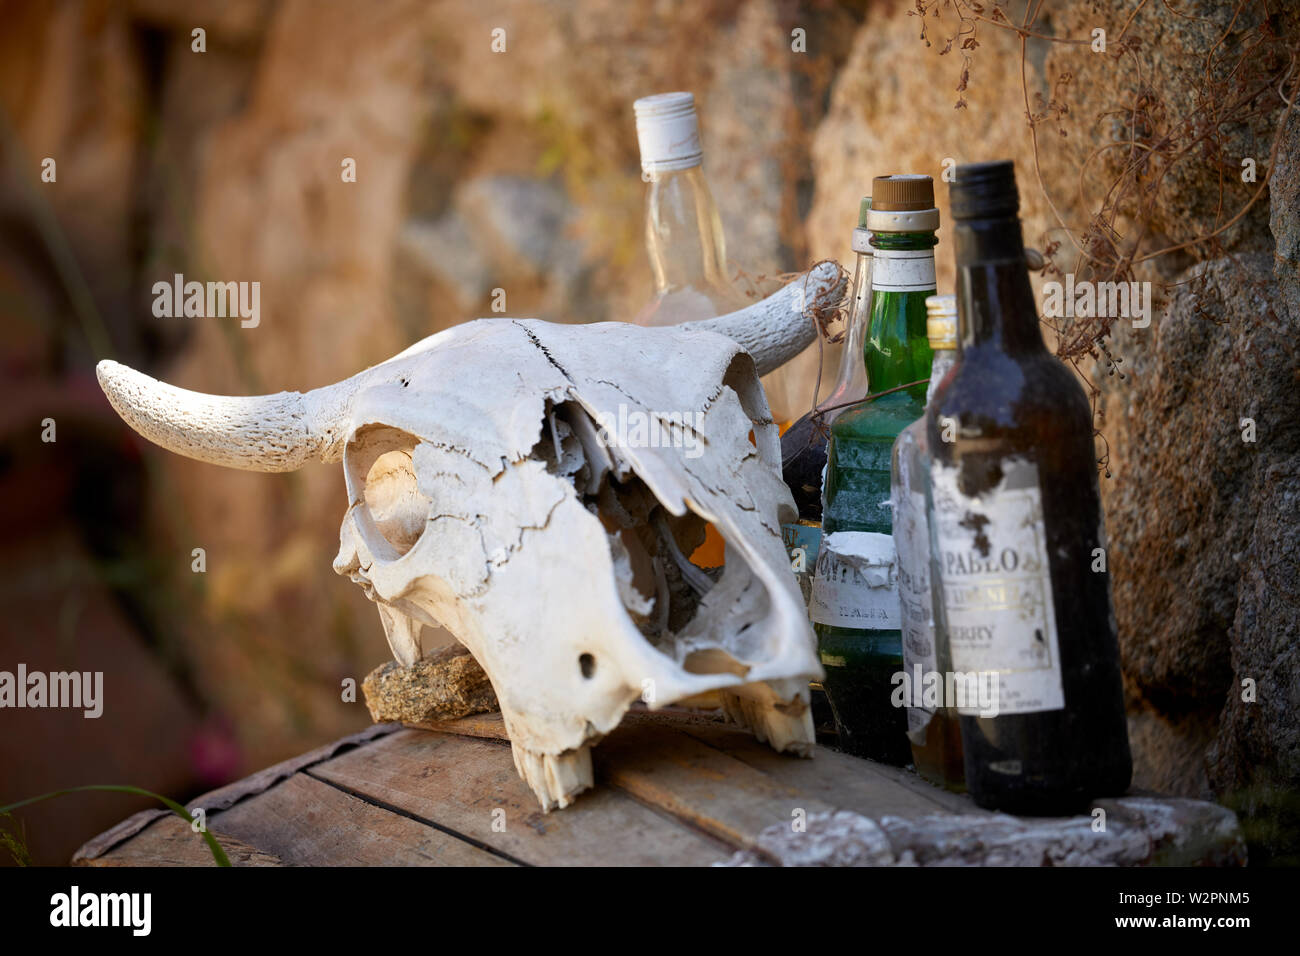 Mykonos, mikonos Greek island, part of the Cyclades, animal skull and bottles Stock Photo